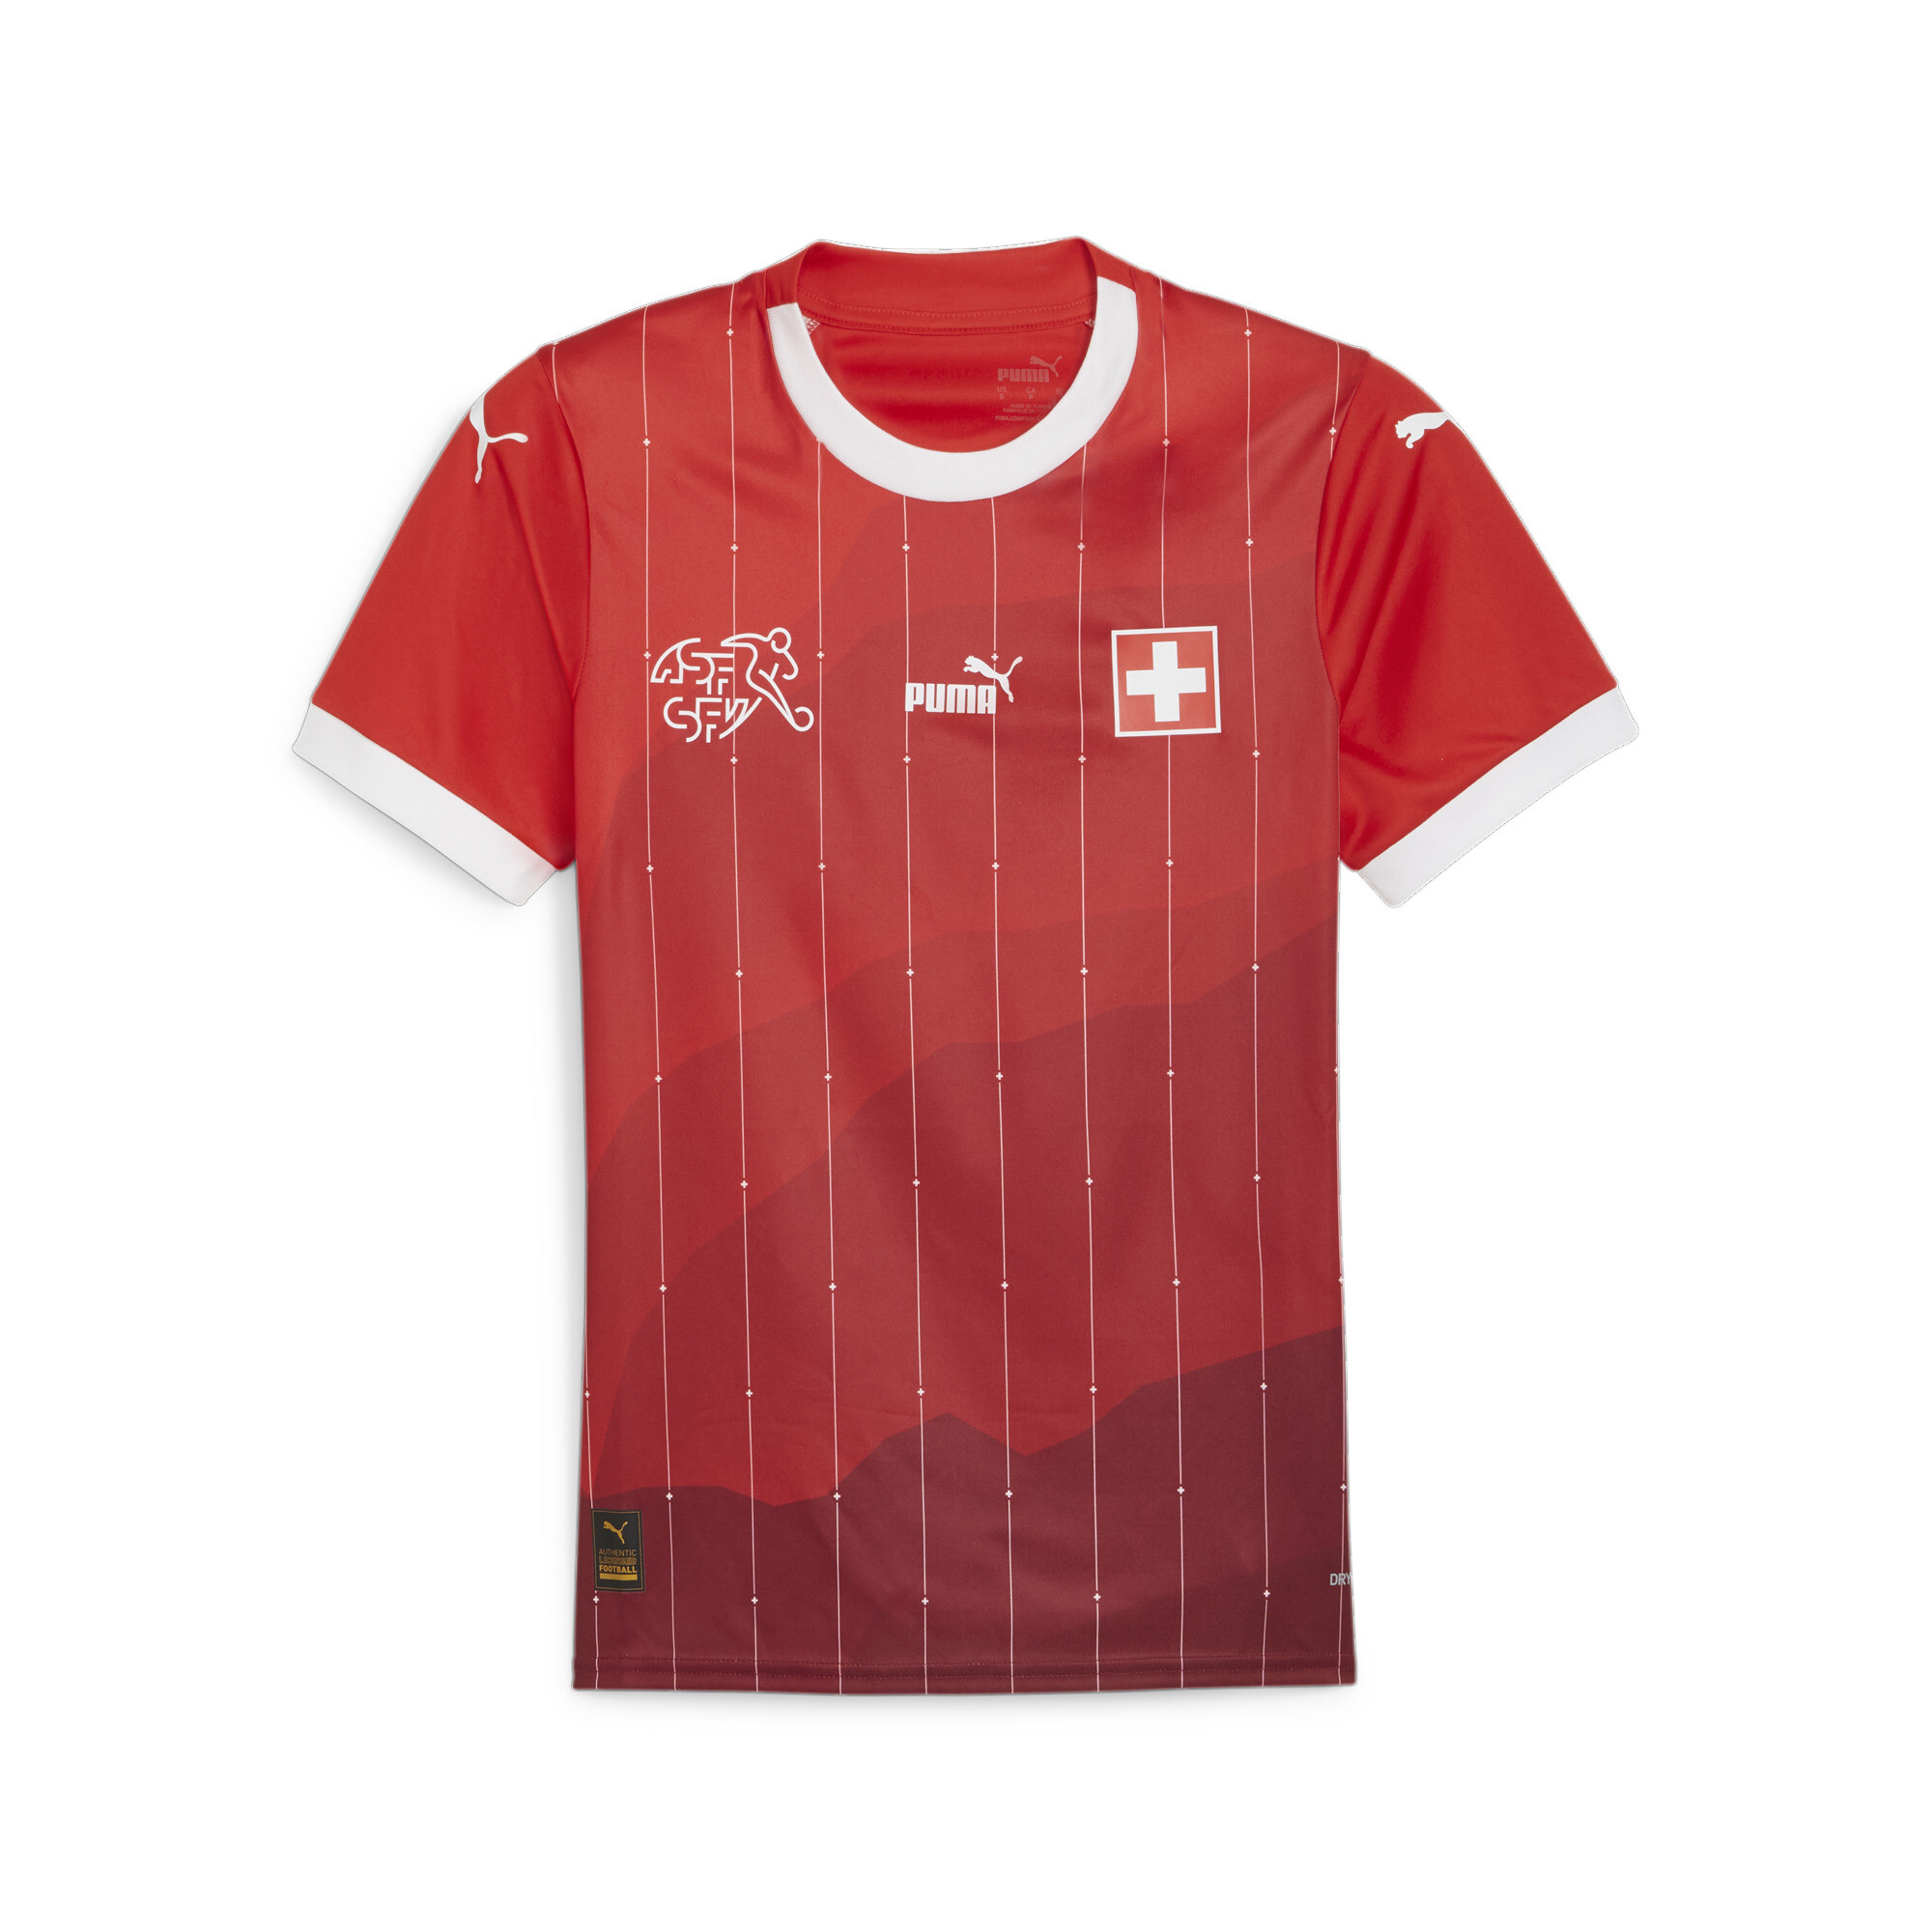 Women's PUMA Switzerland 23/24 World Cup Home Jersey In Red, Size XL